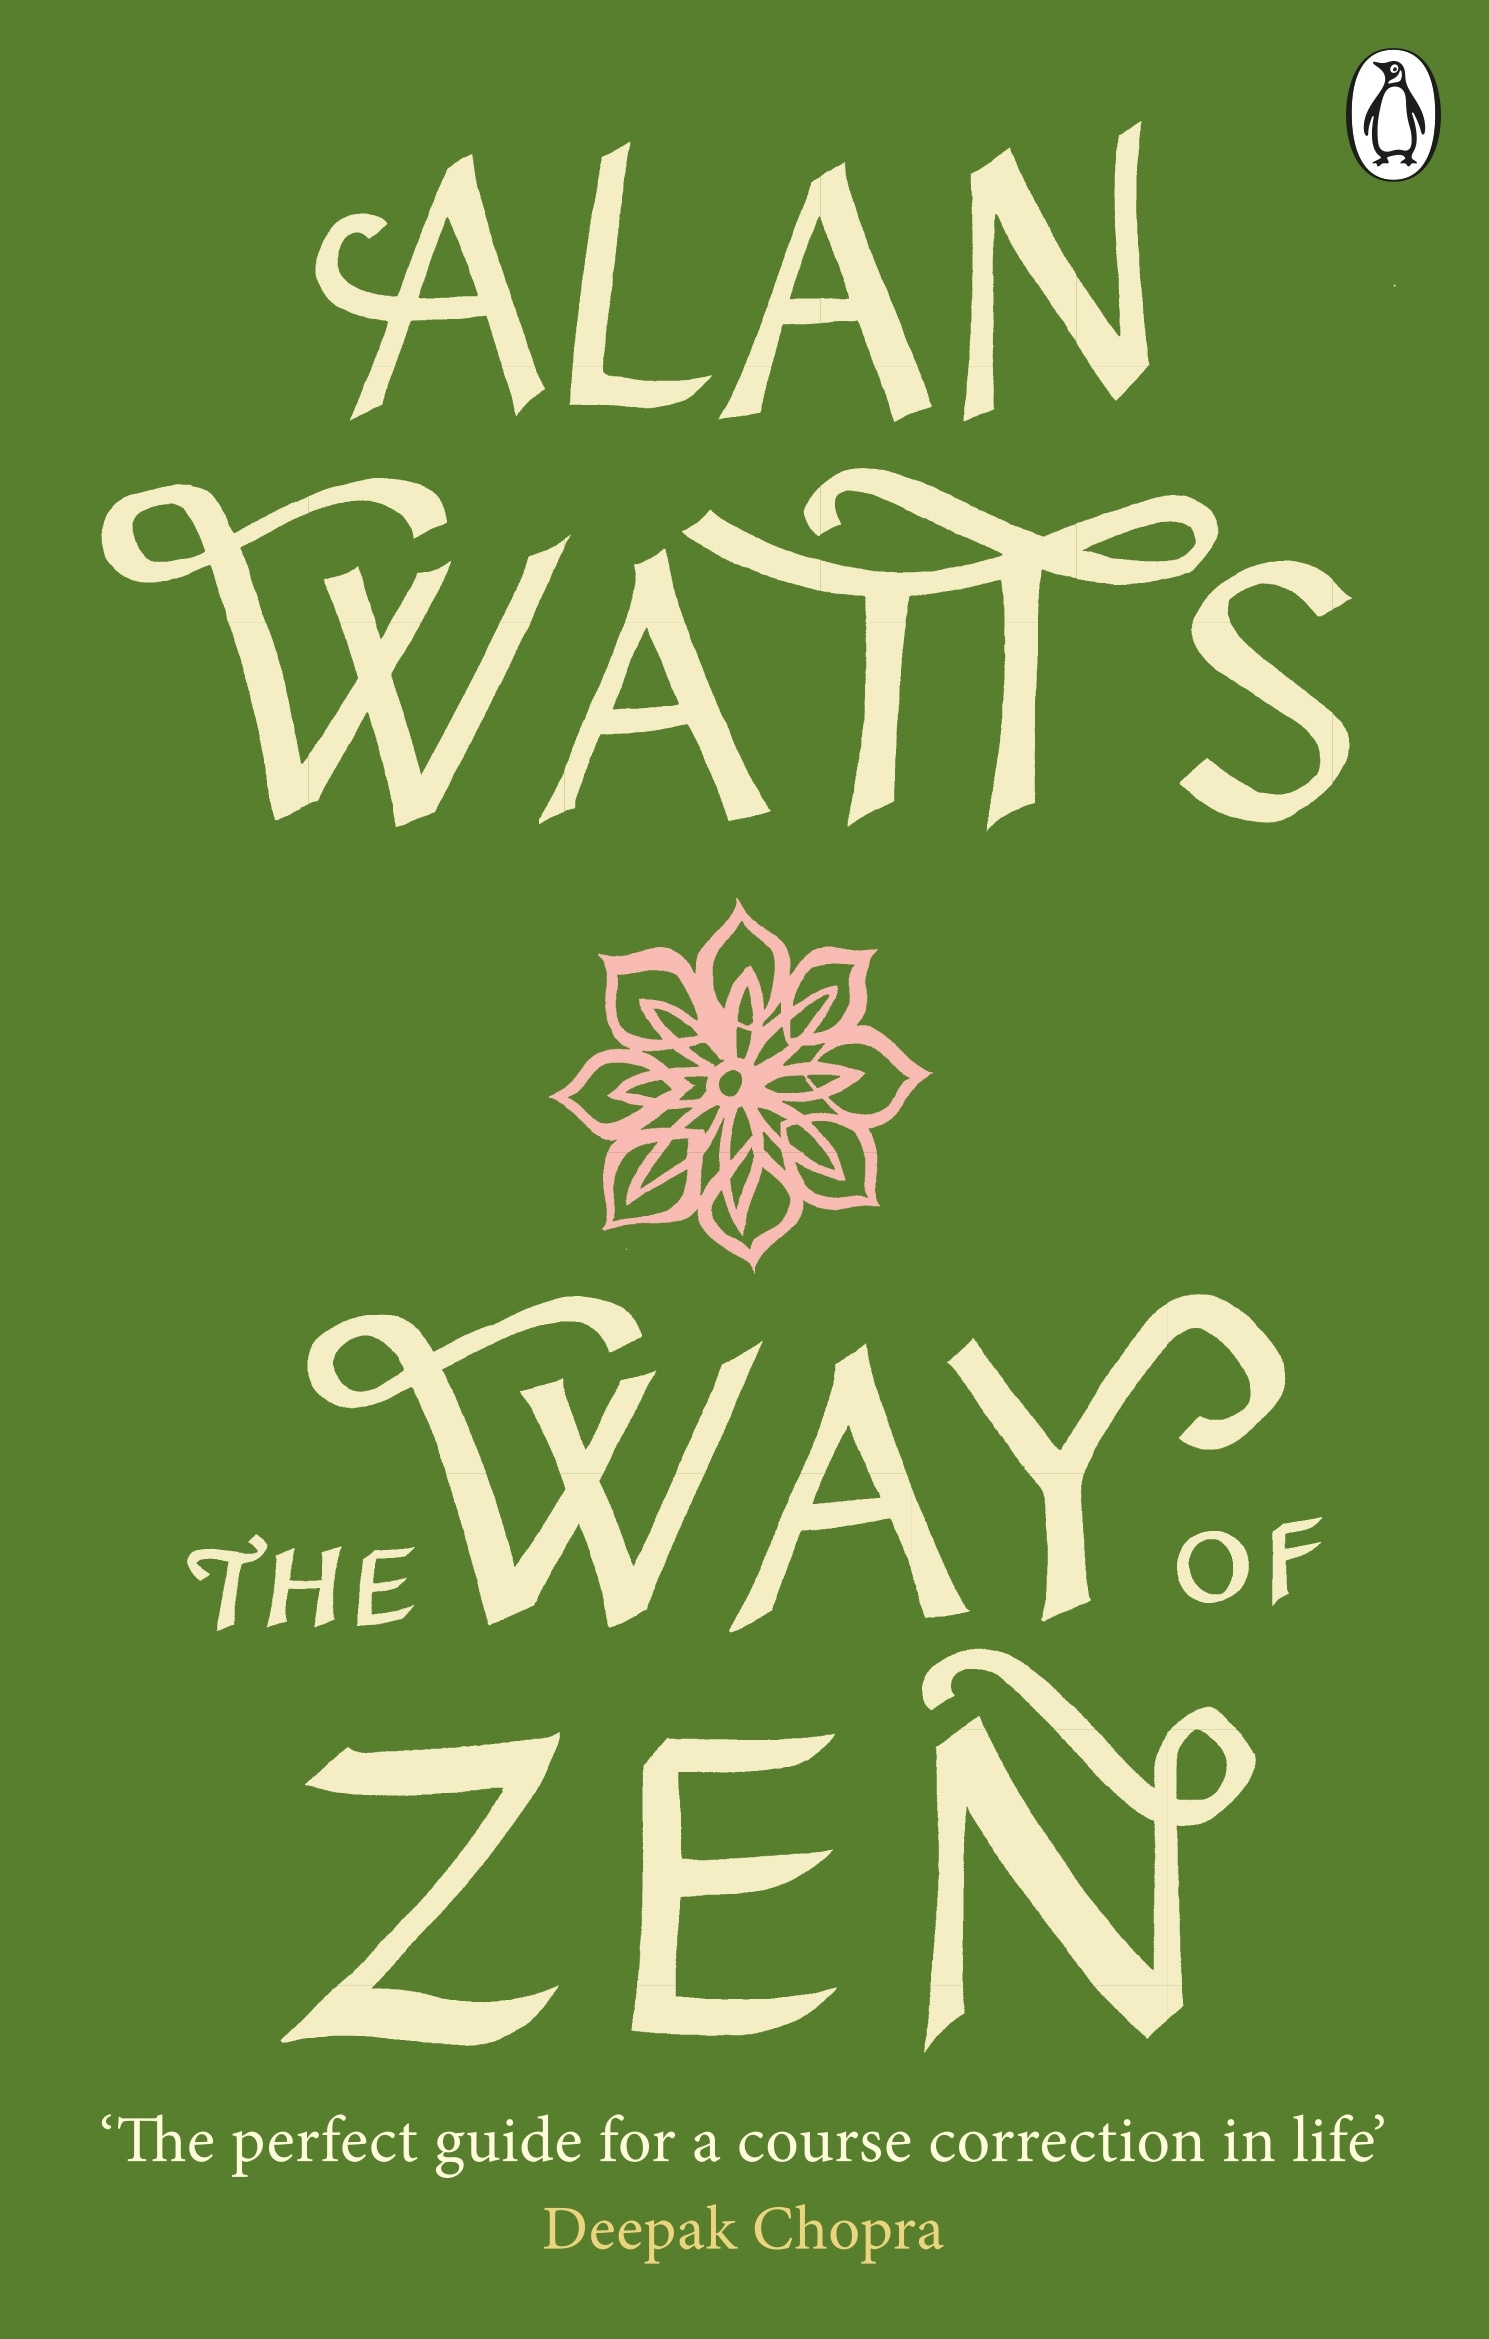 Book “The Way of Zen” by Alan W Watts — July 1, 2021